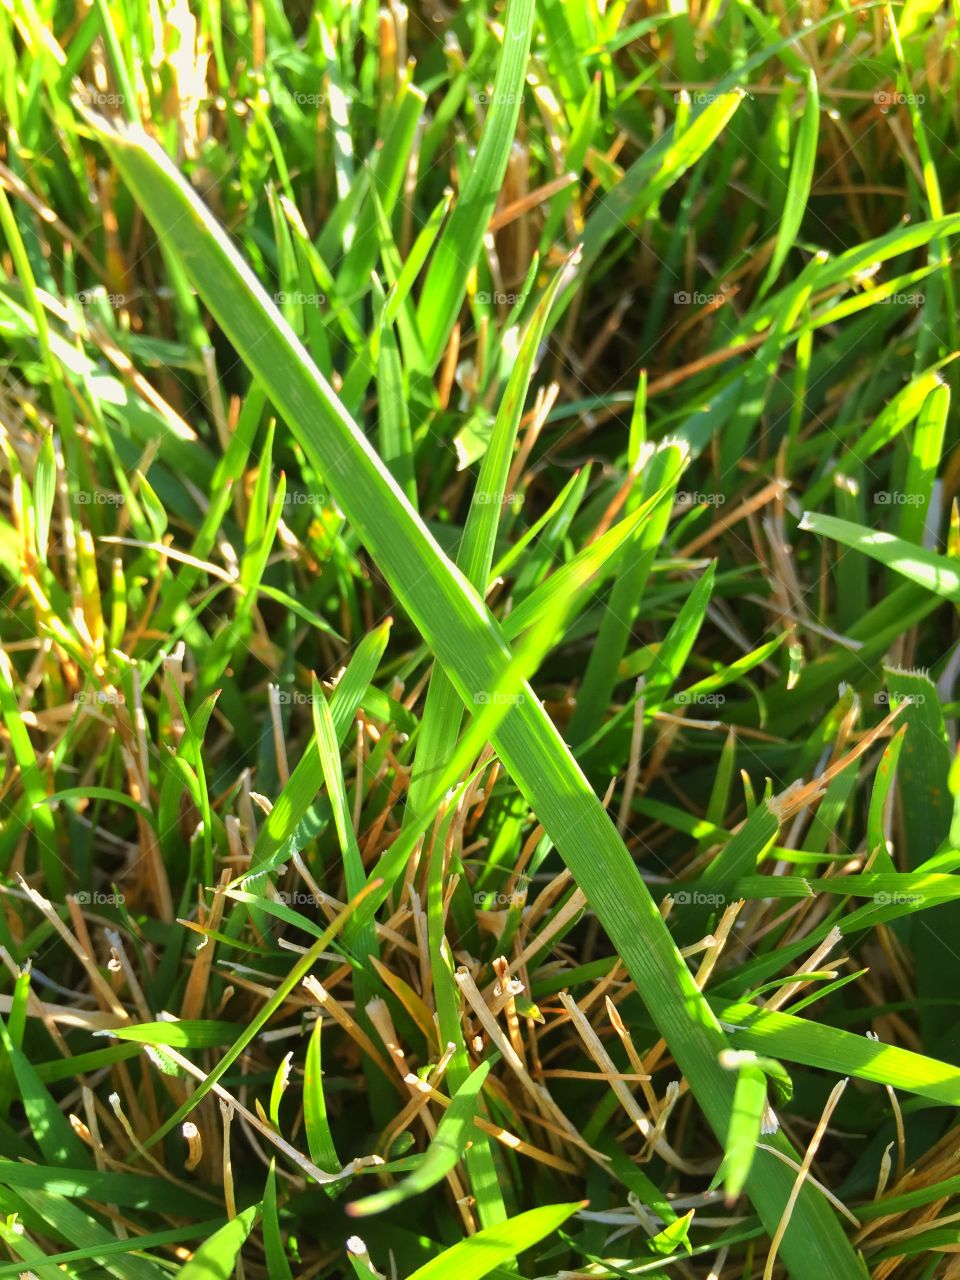 Sea of Grass